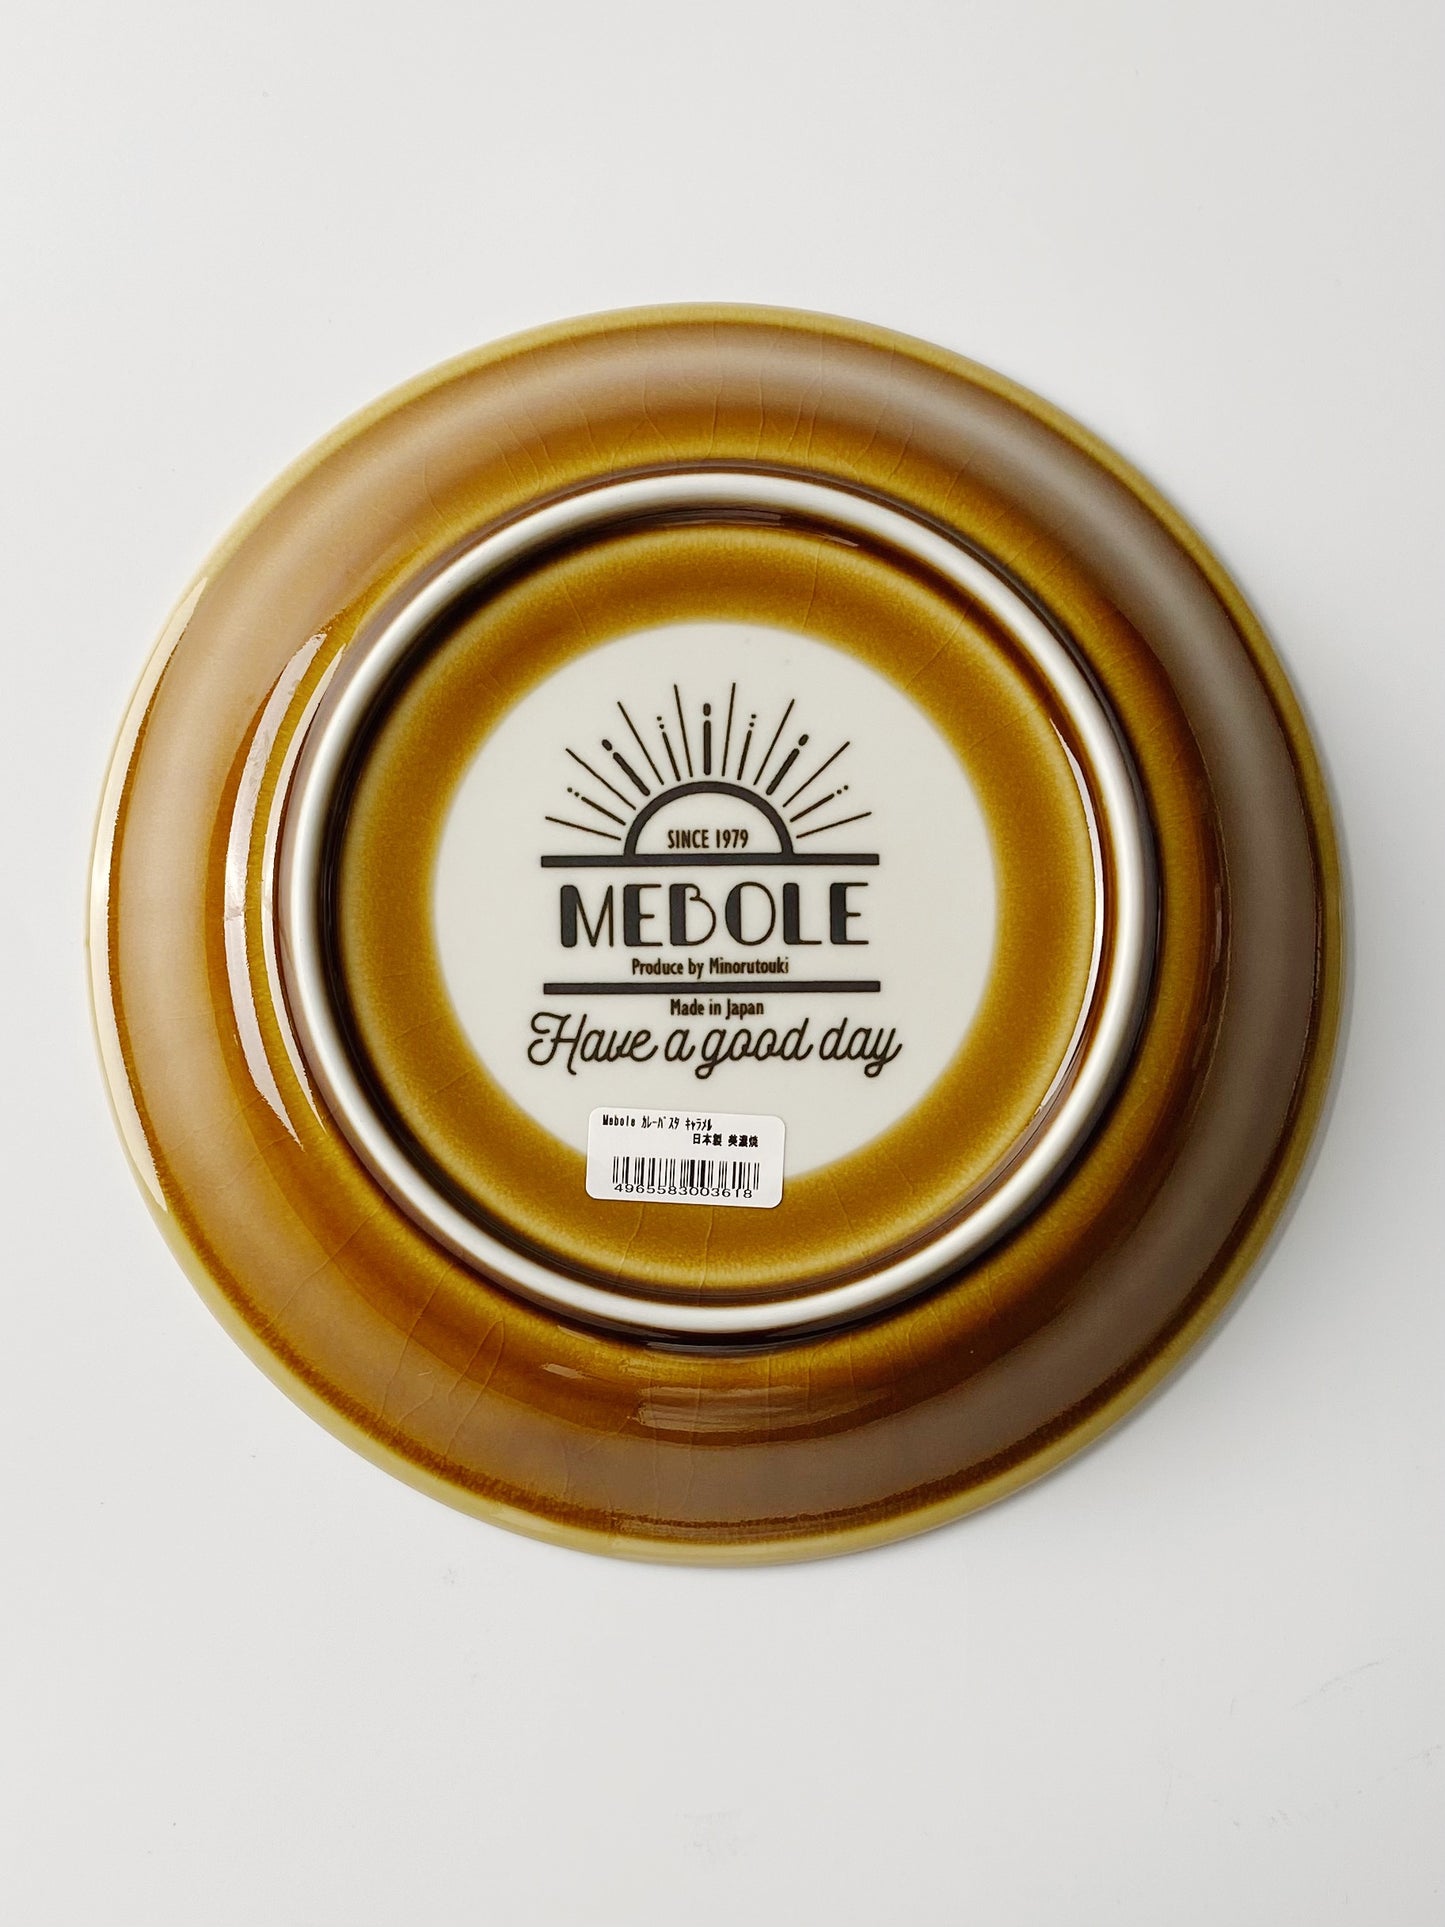 日本製美濃燒 Mebore 陶瓷中型碟(焦糖色)｜Japanese Mino Ware Mebore Plate(Size M)(Caramel)